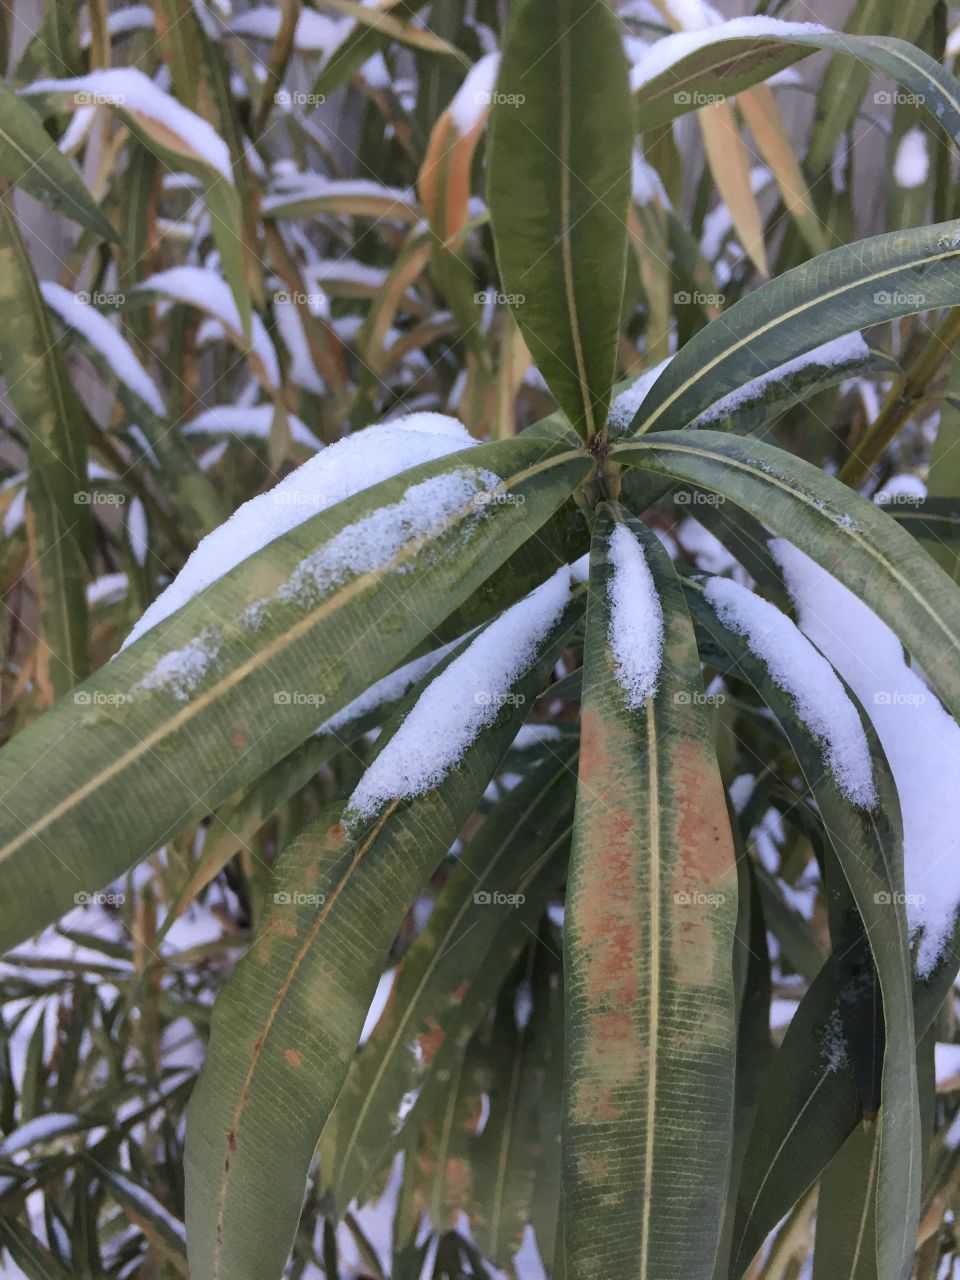 Snow on a plant.